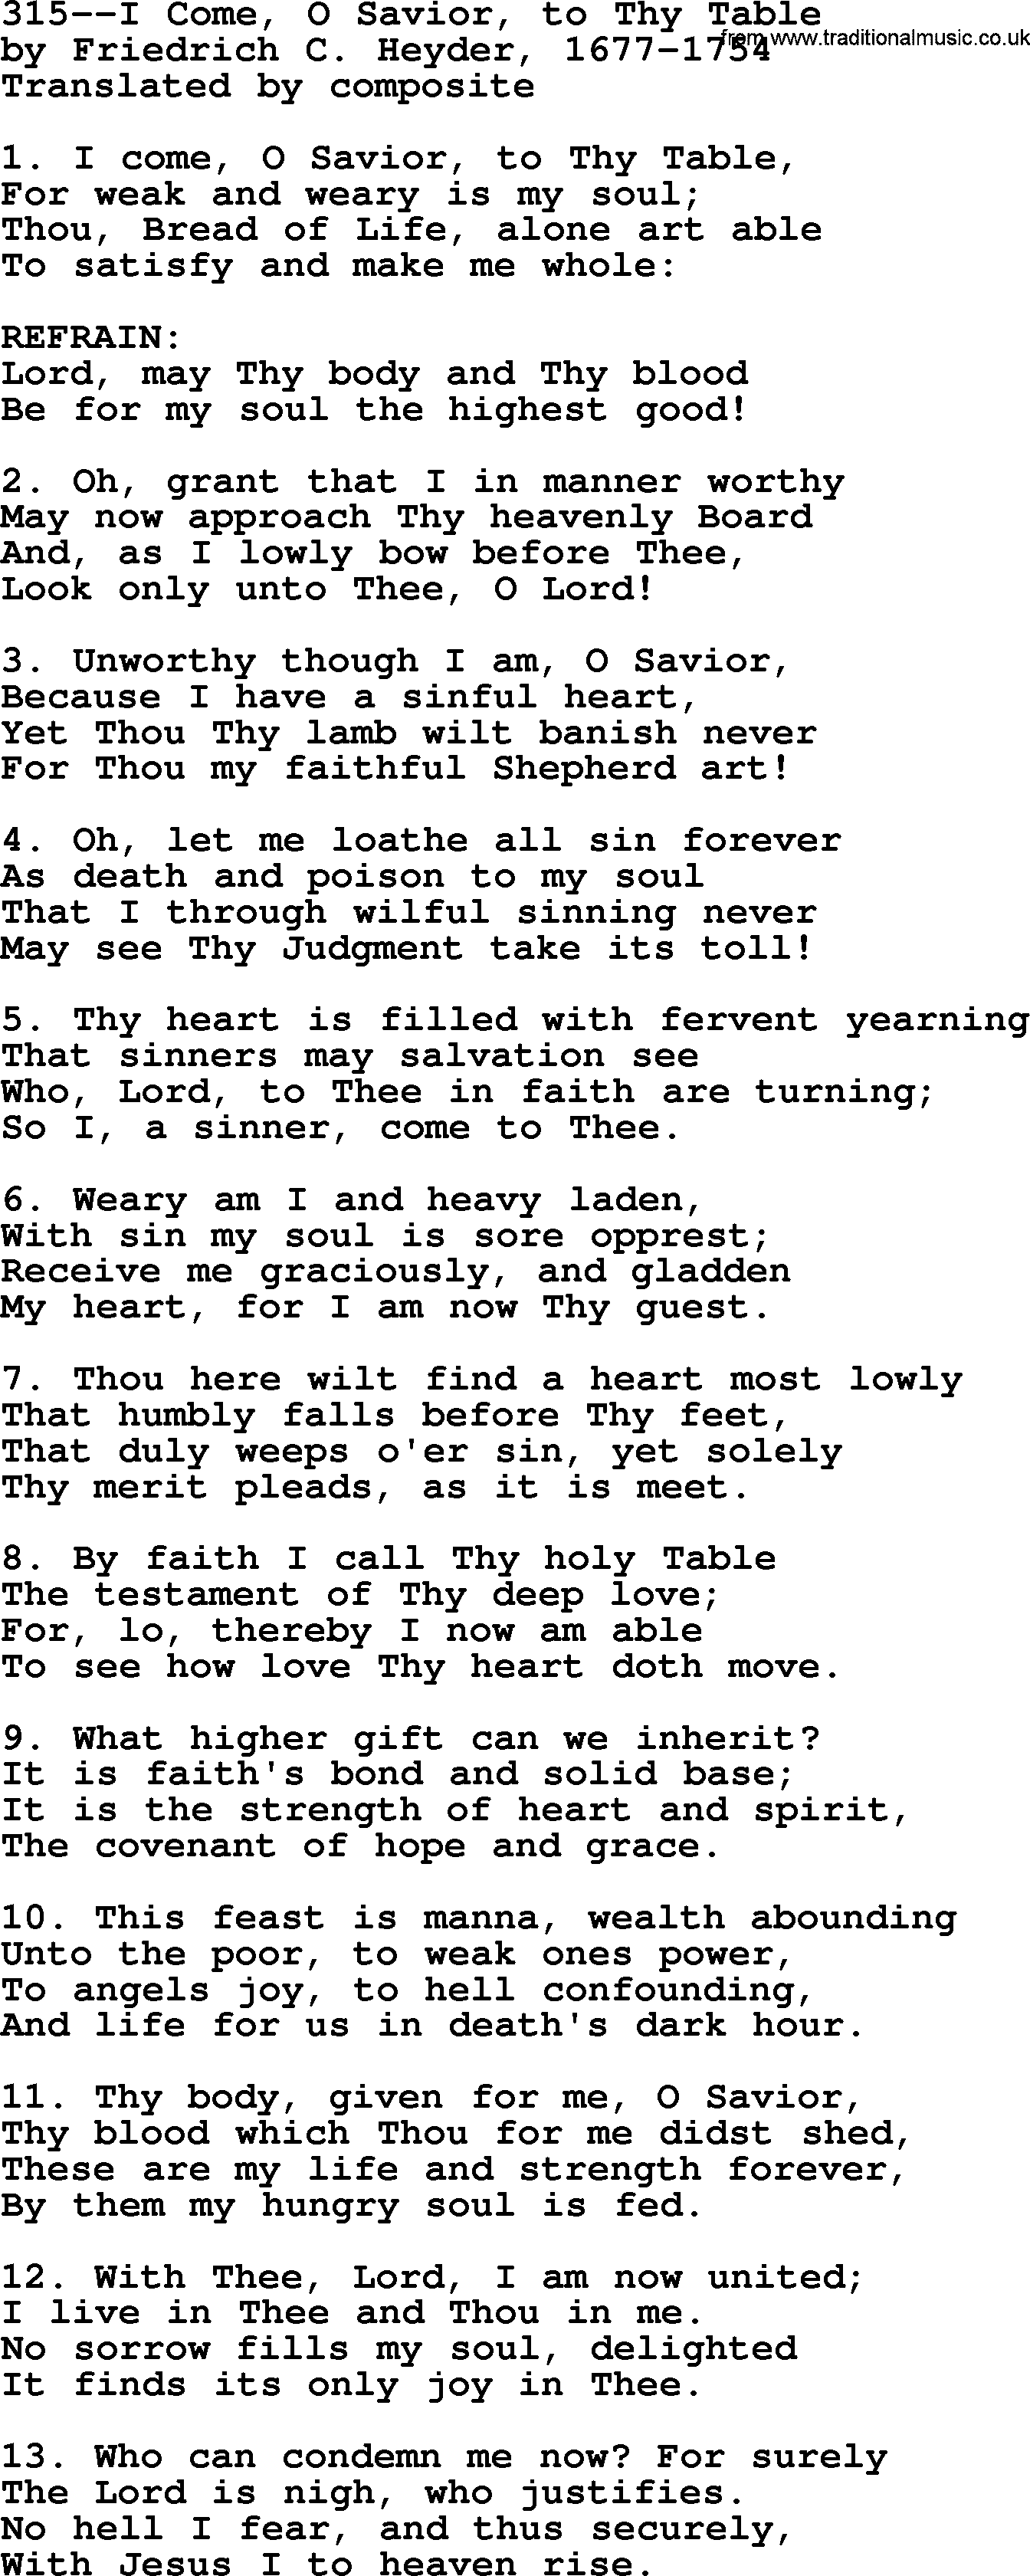 Lutheran Hymn: 315--I Come, O Savior, to Thy Table.txt lyrics with PDF